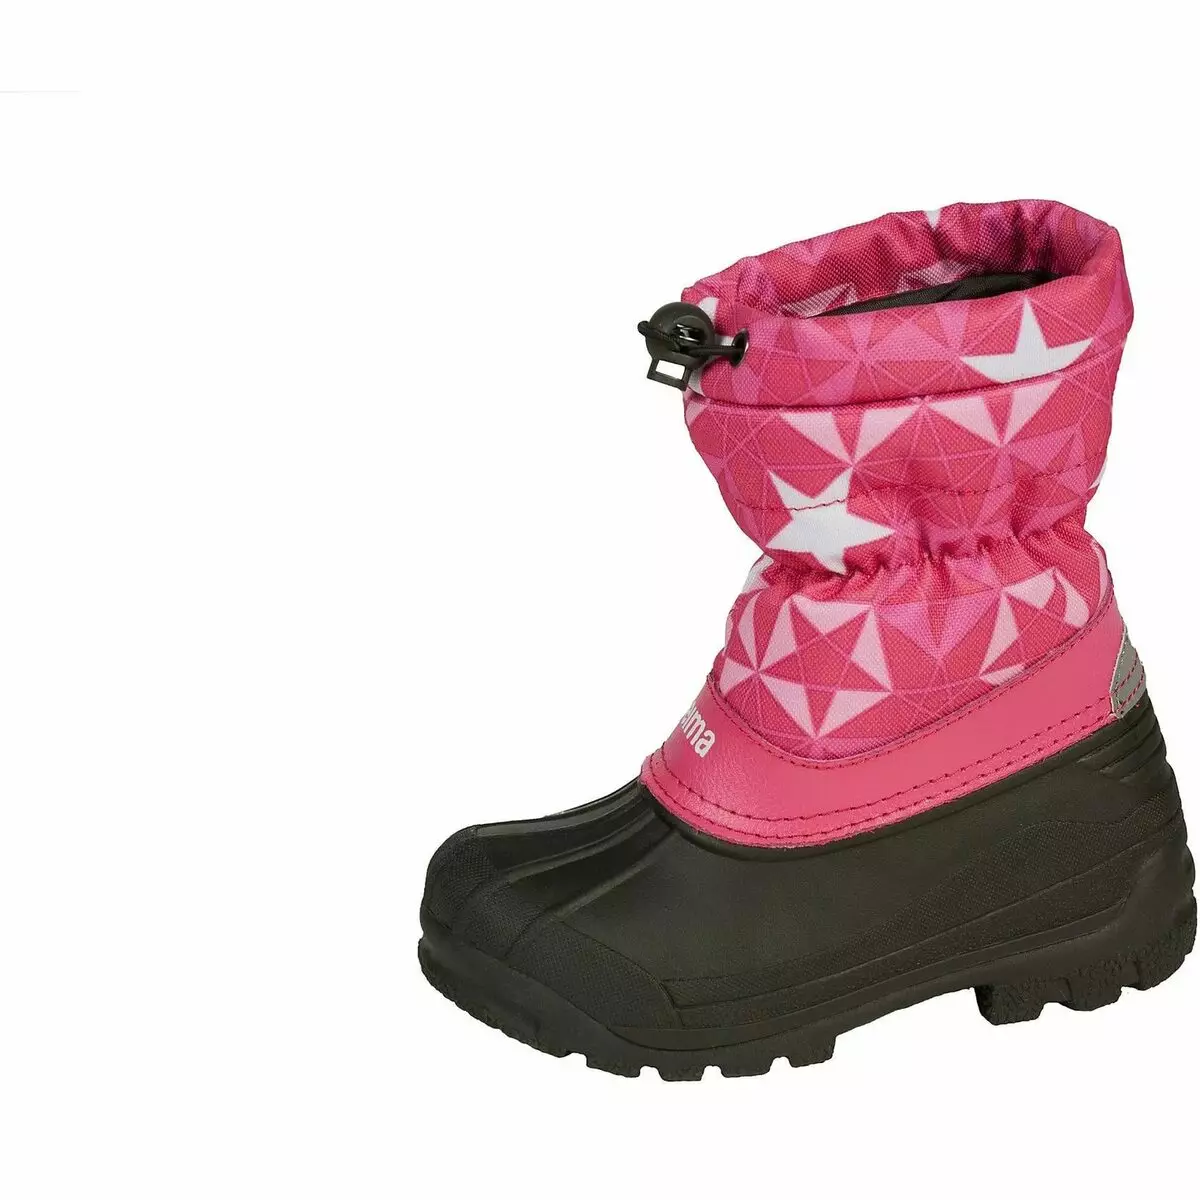 Reuim Boots (72 ata): Winter Heights Model mo teine ​​Nefar ma Lassie e Reama, Deal Retand 2256_62